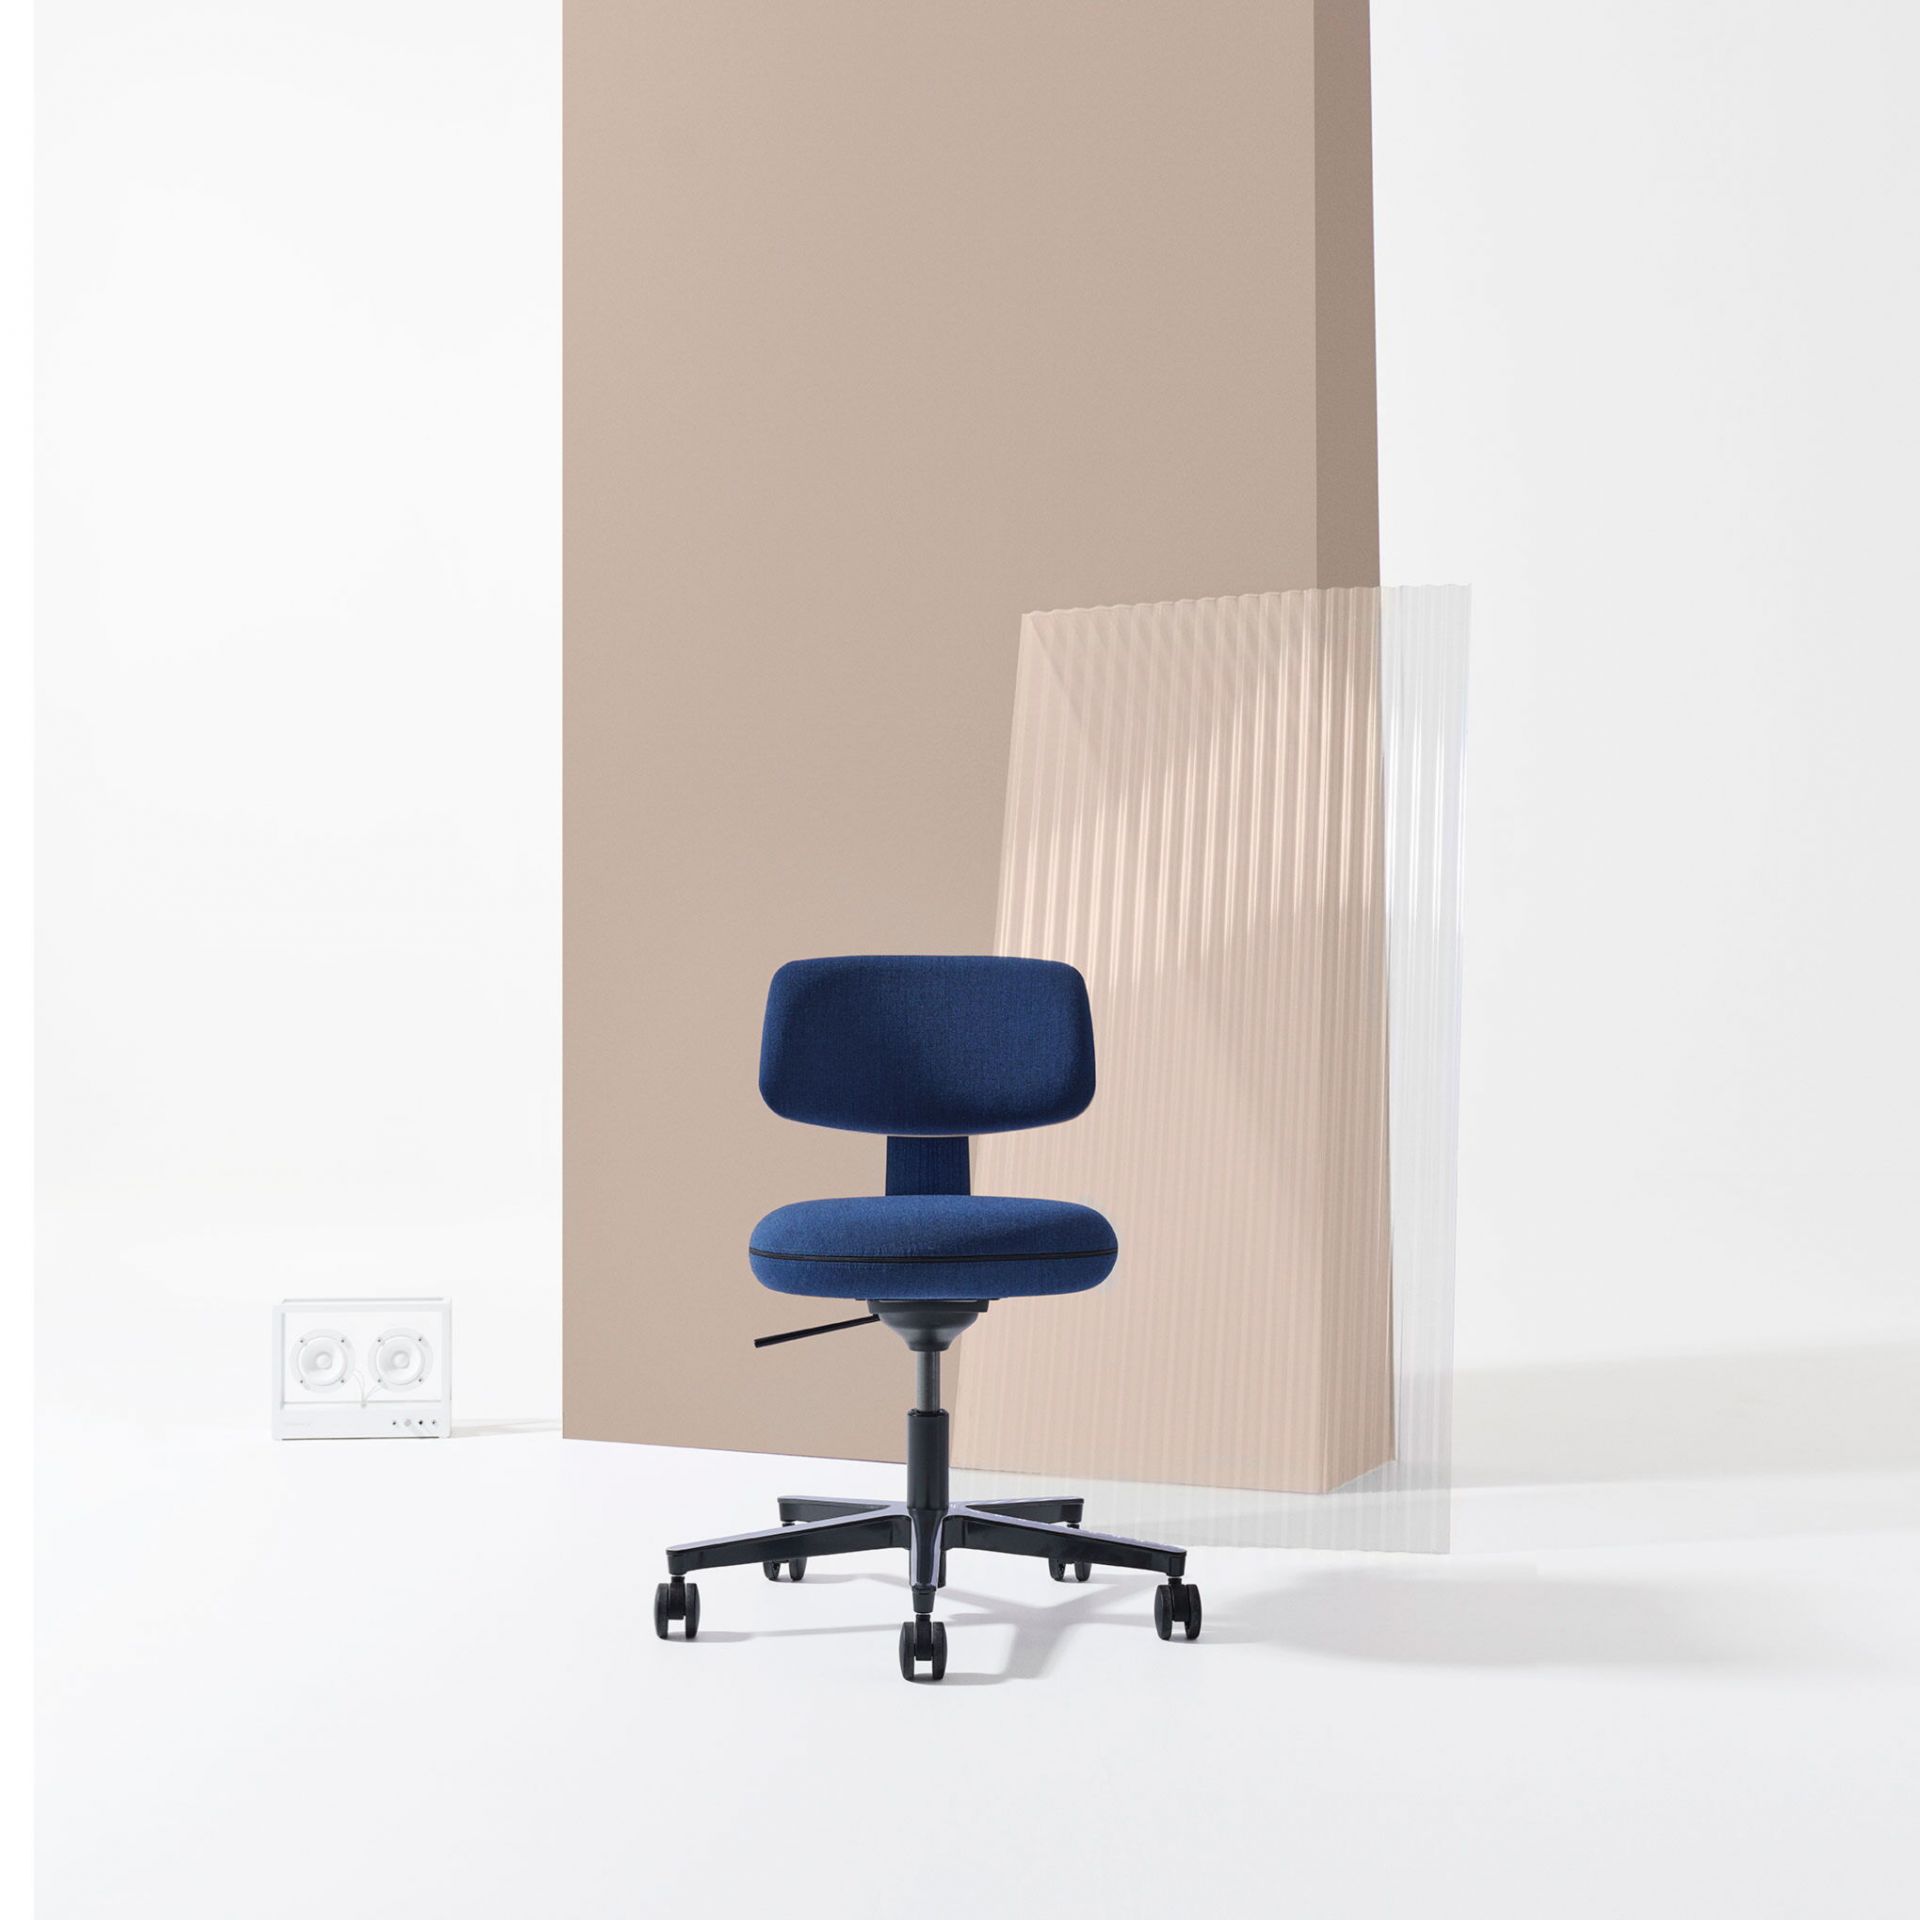 Savo 360 360 meeting chair product image 1